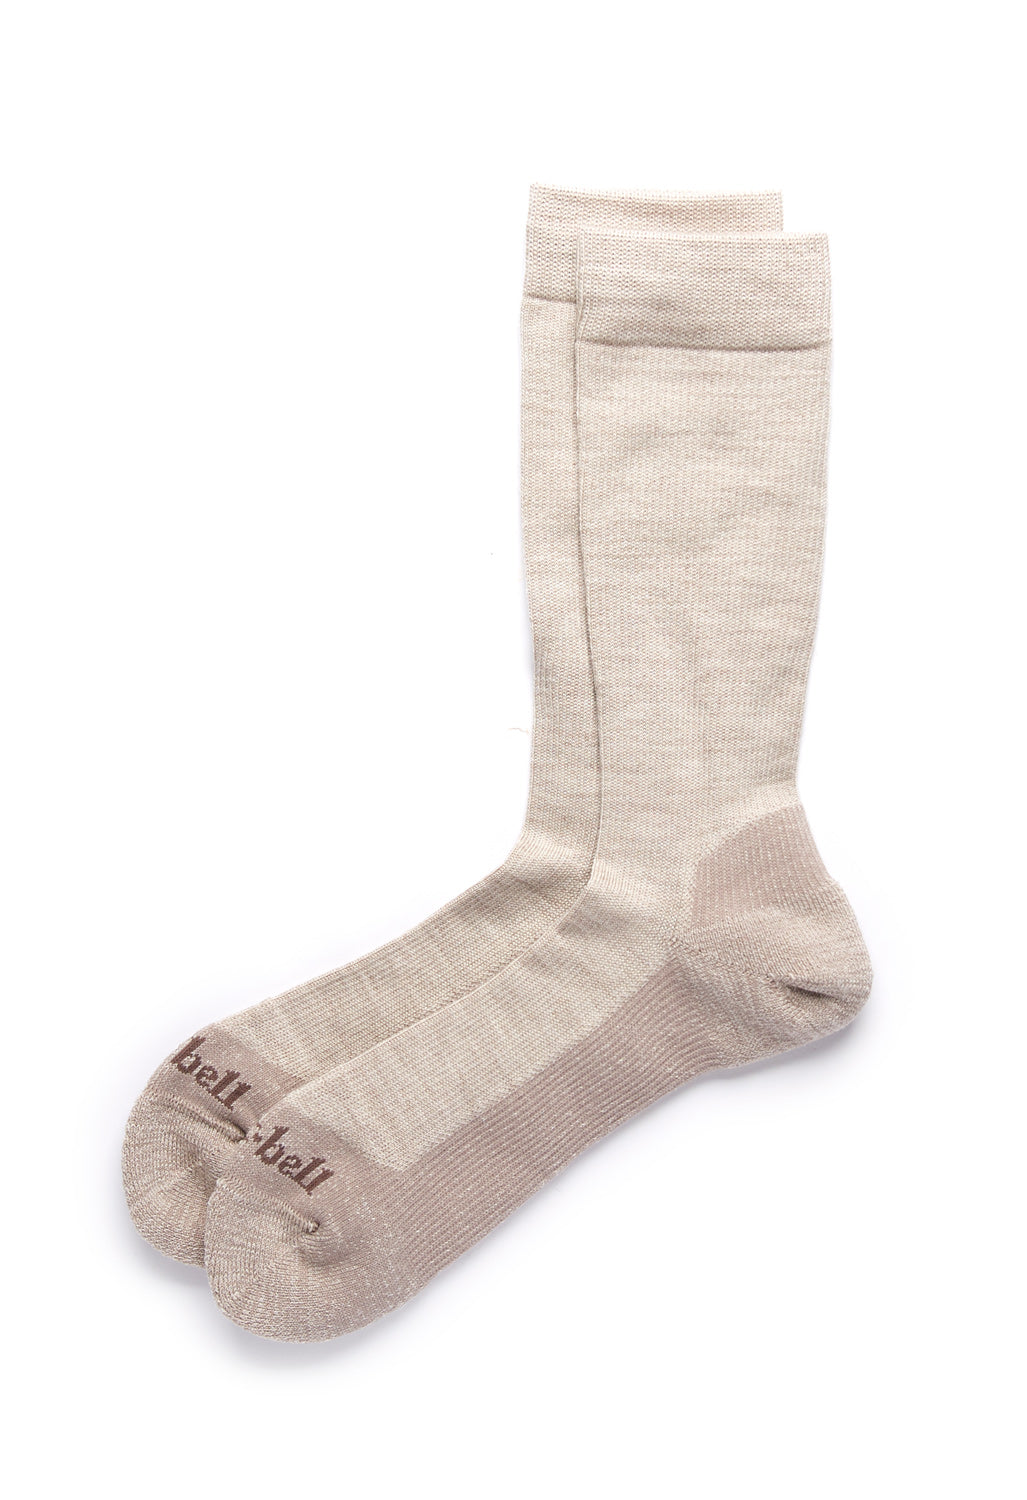 Montbell Merino Wool Walking Socks 3